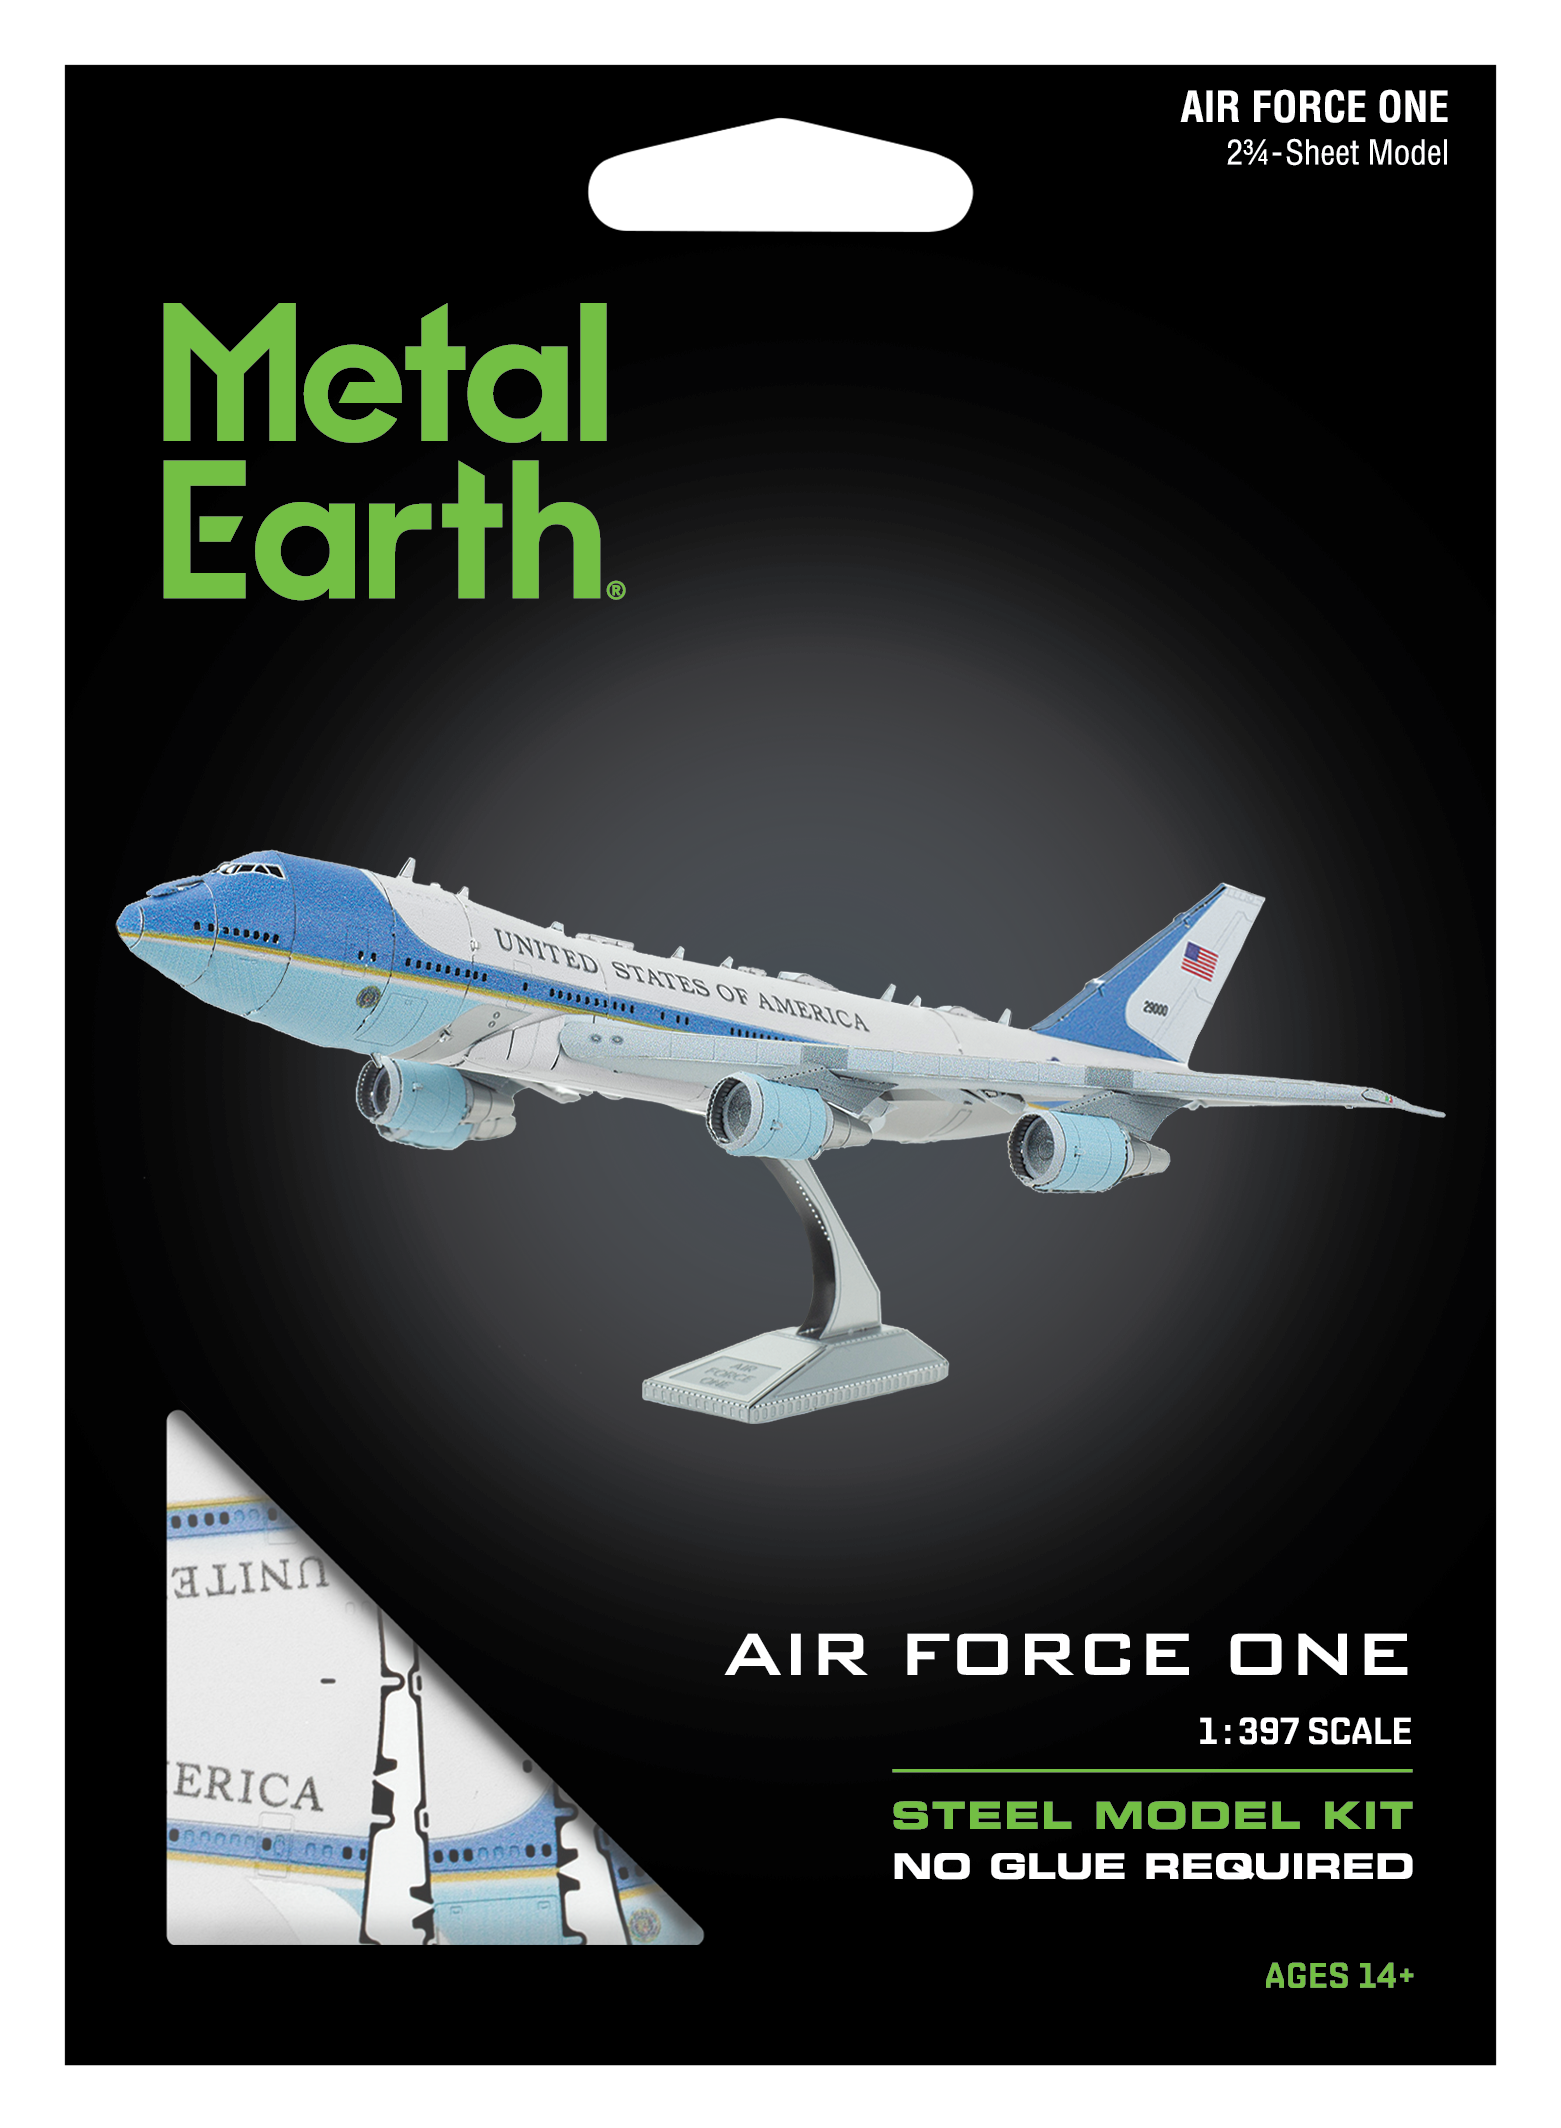 Metal Earth - Air Force One Model Kit